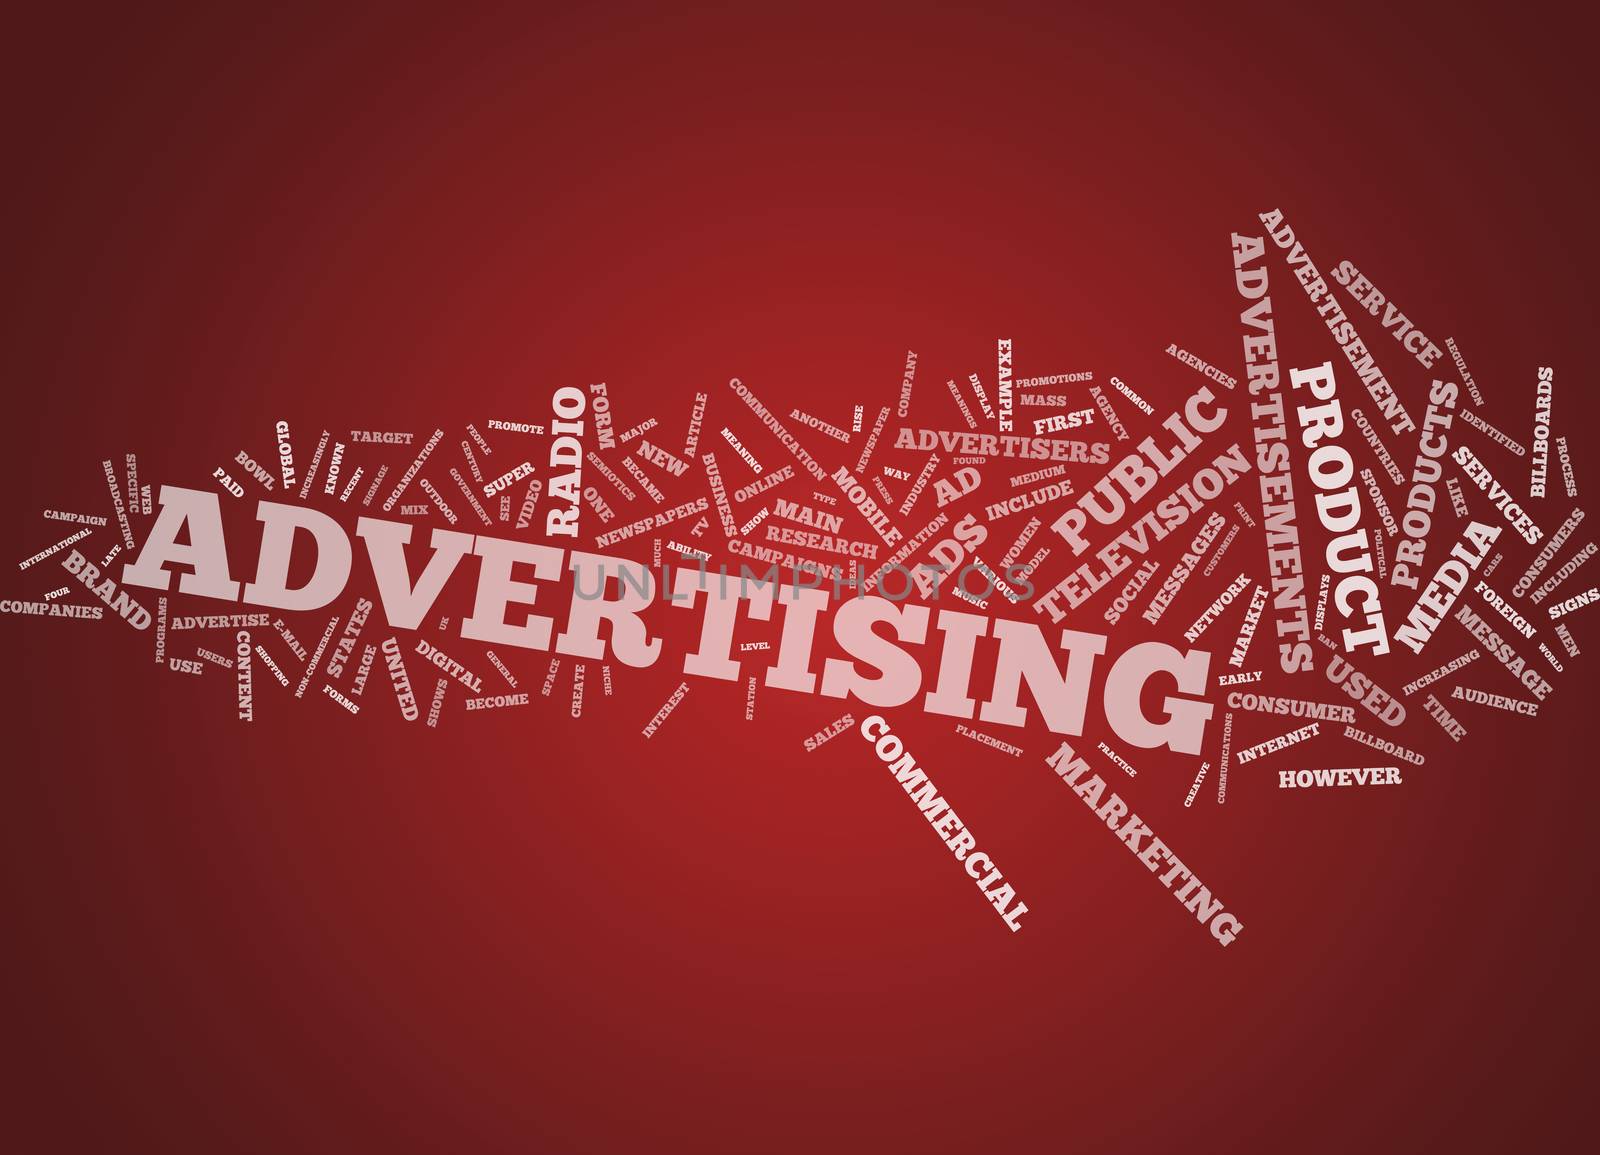 Word Cloud "Advertising" by mindscanner